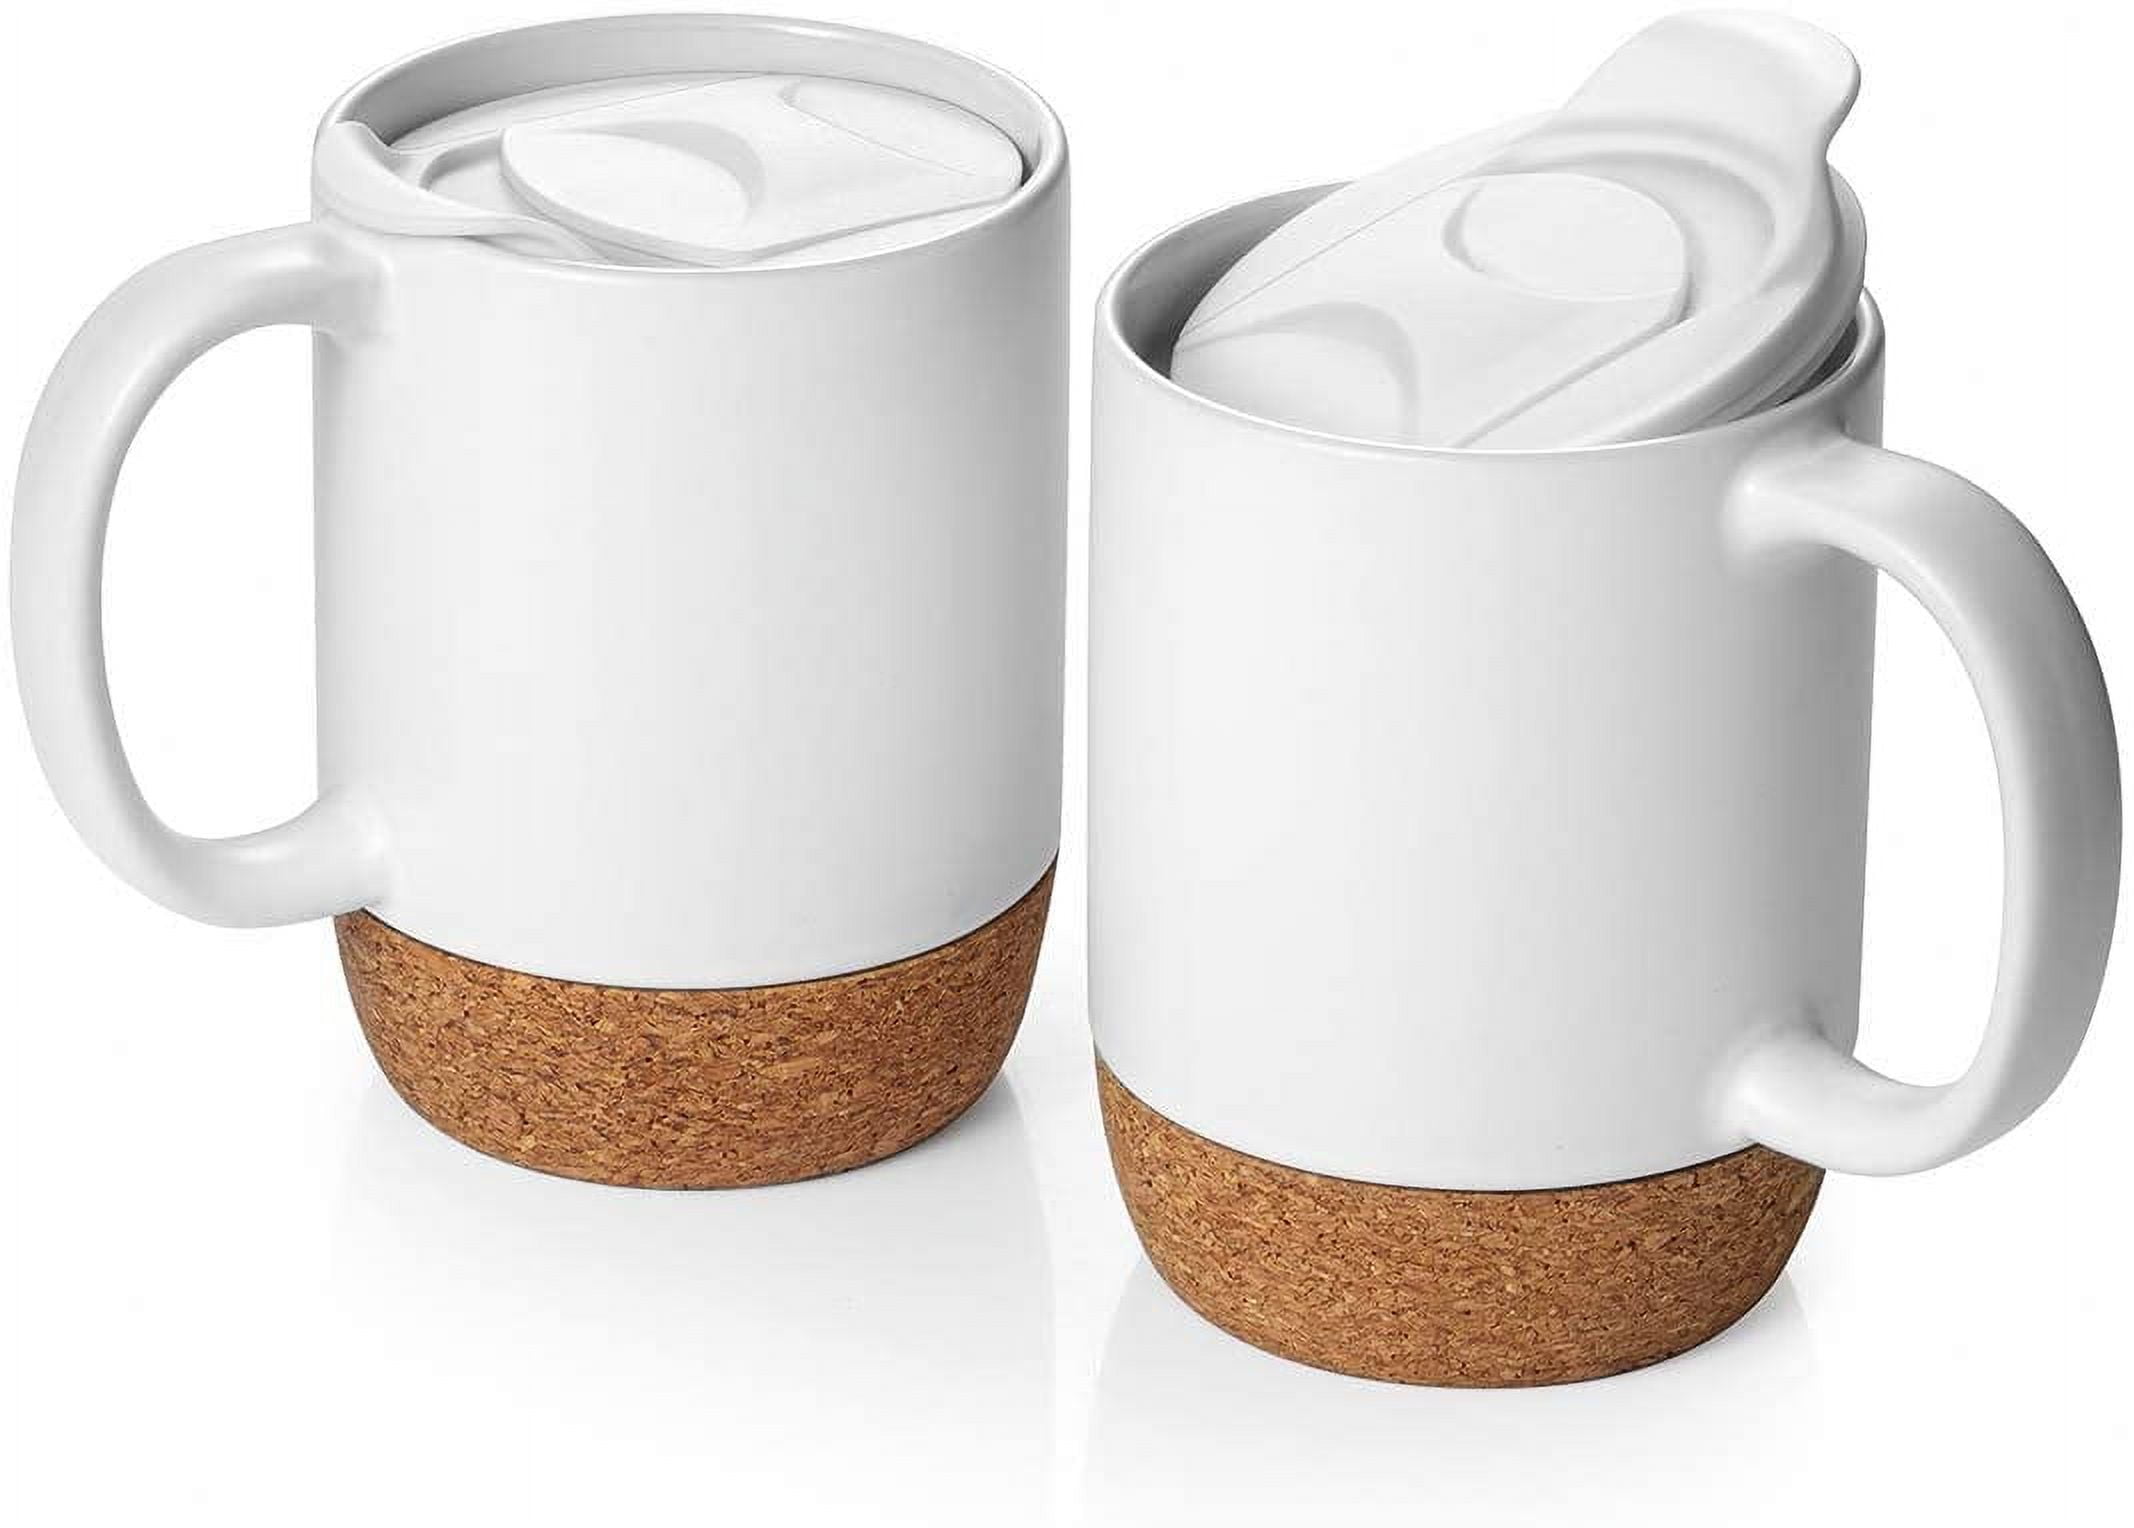 BYCNZB 30oz Super Large Ceramic Coffee Mugs Large Handles Set of 2 (Cream)